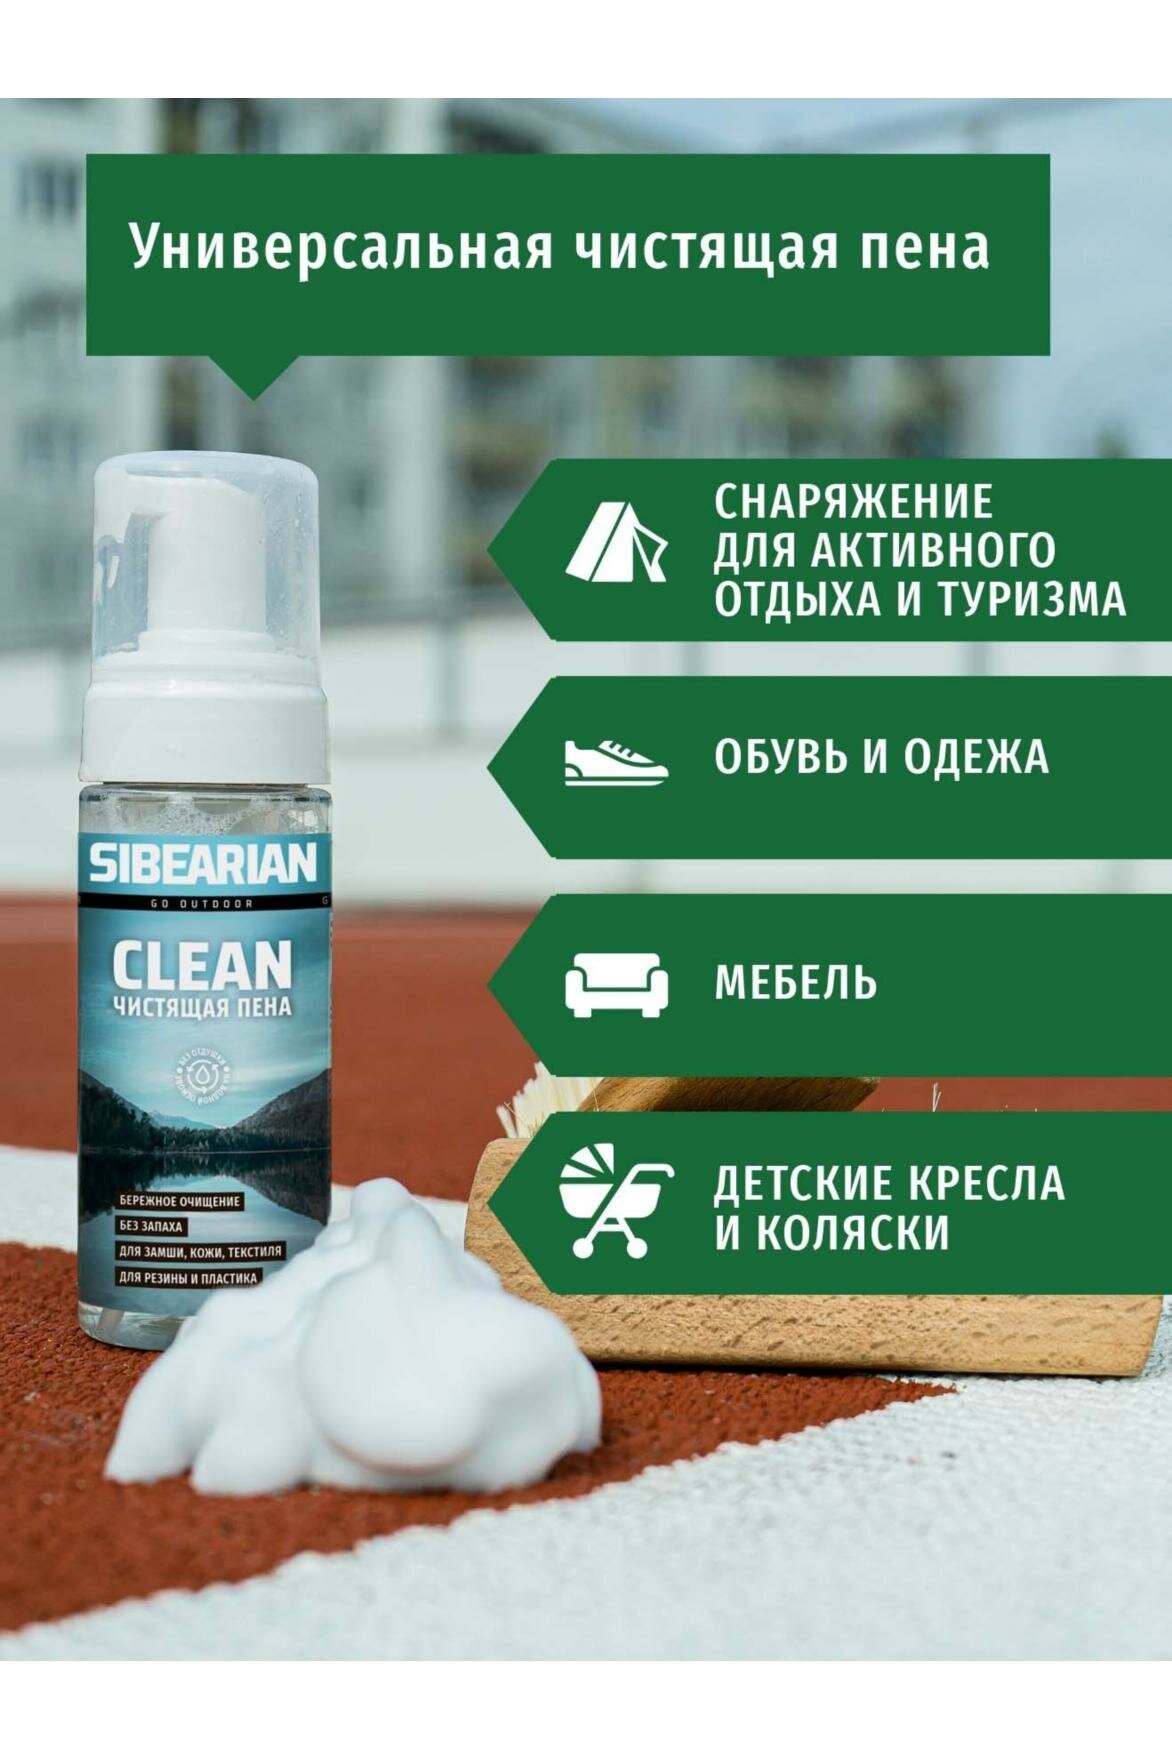 Чистящее средство Sibearian - фото №6